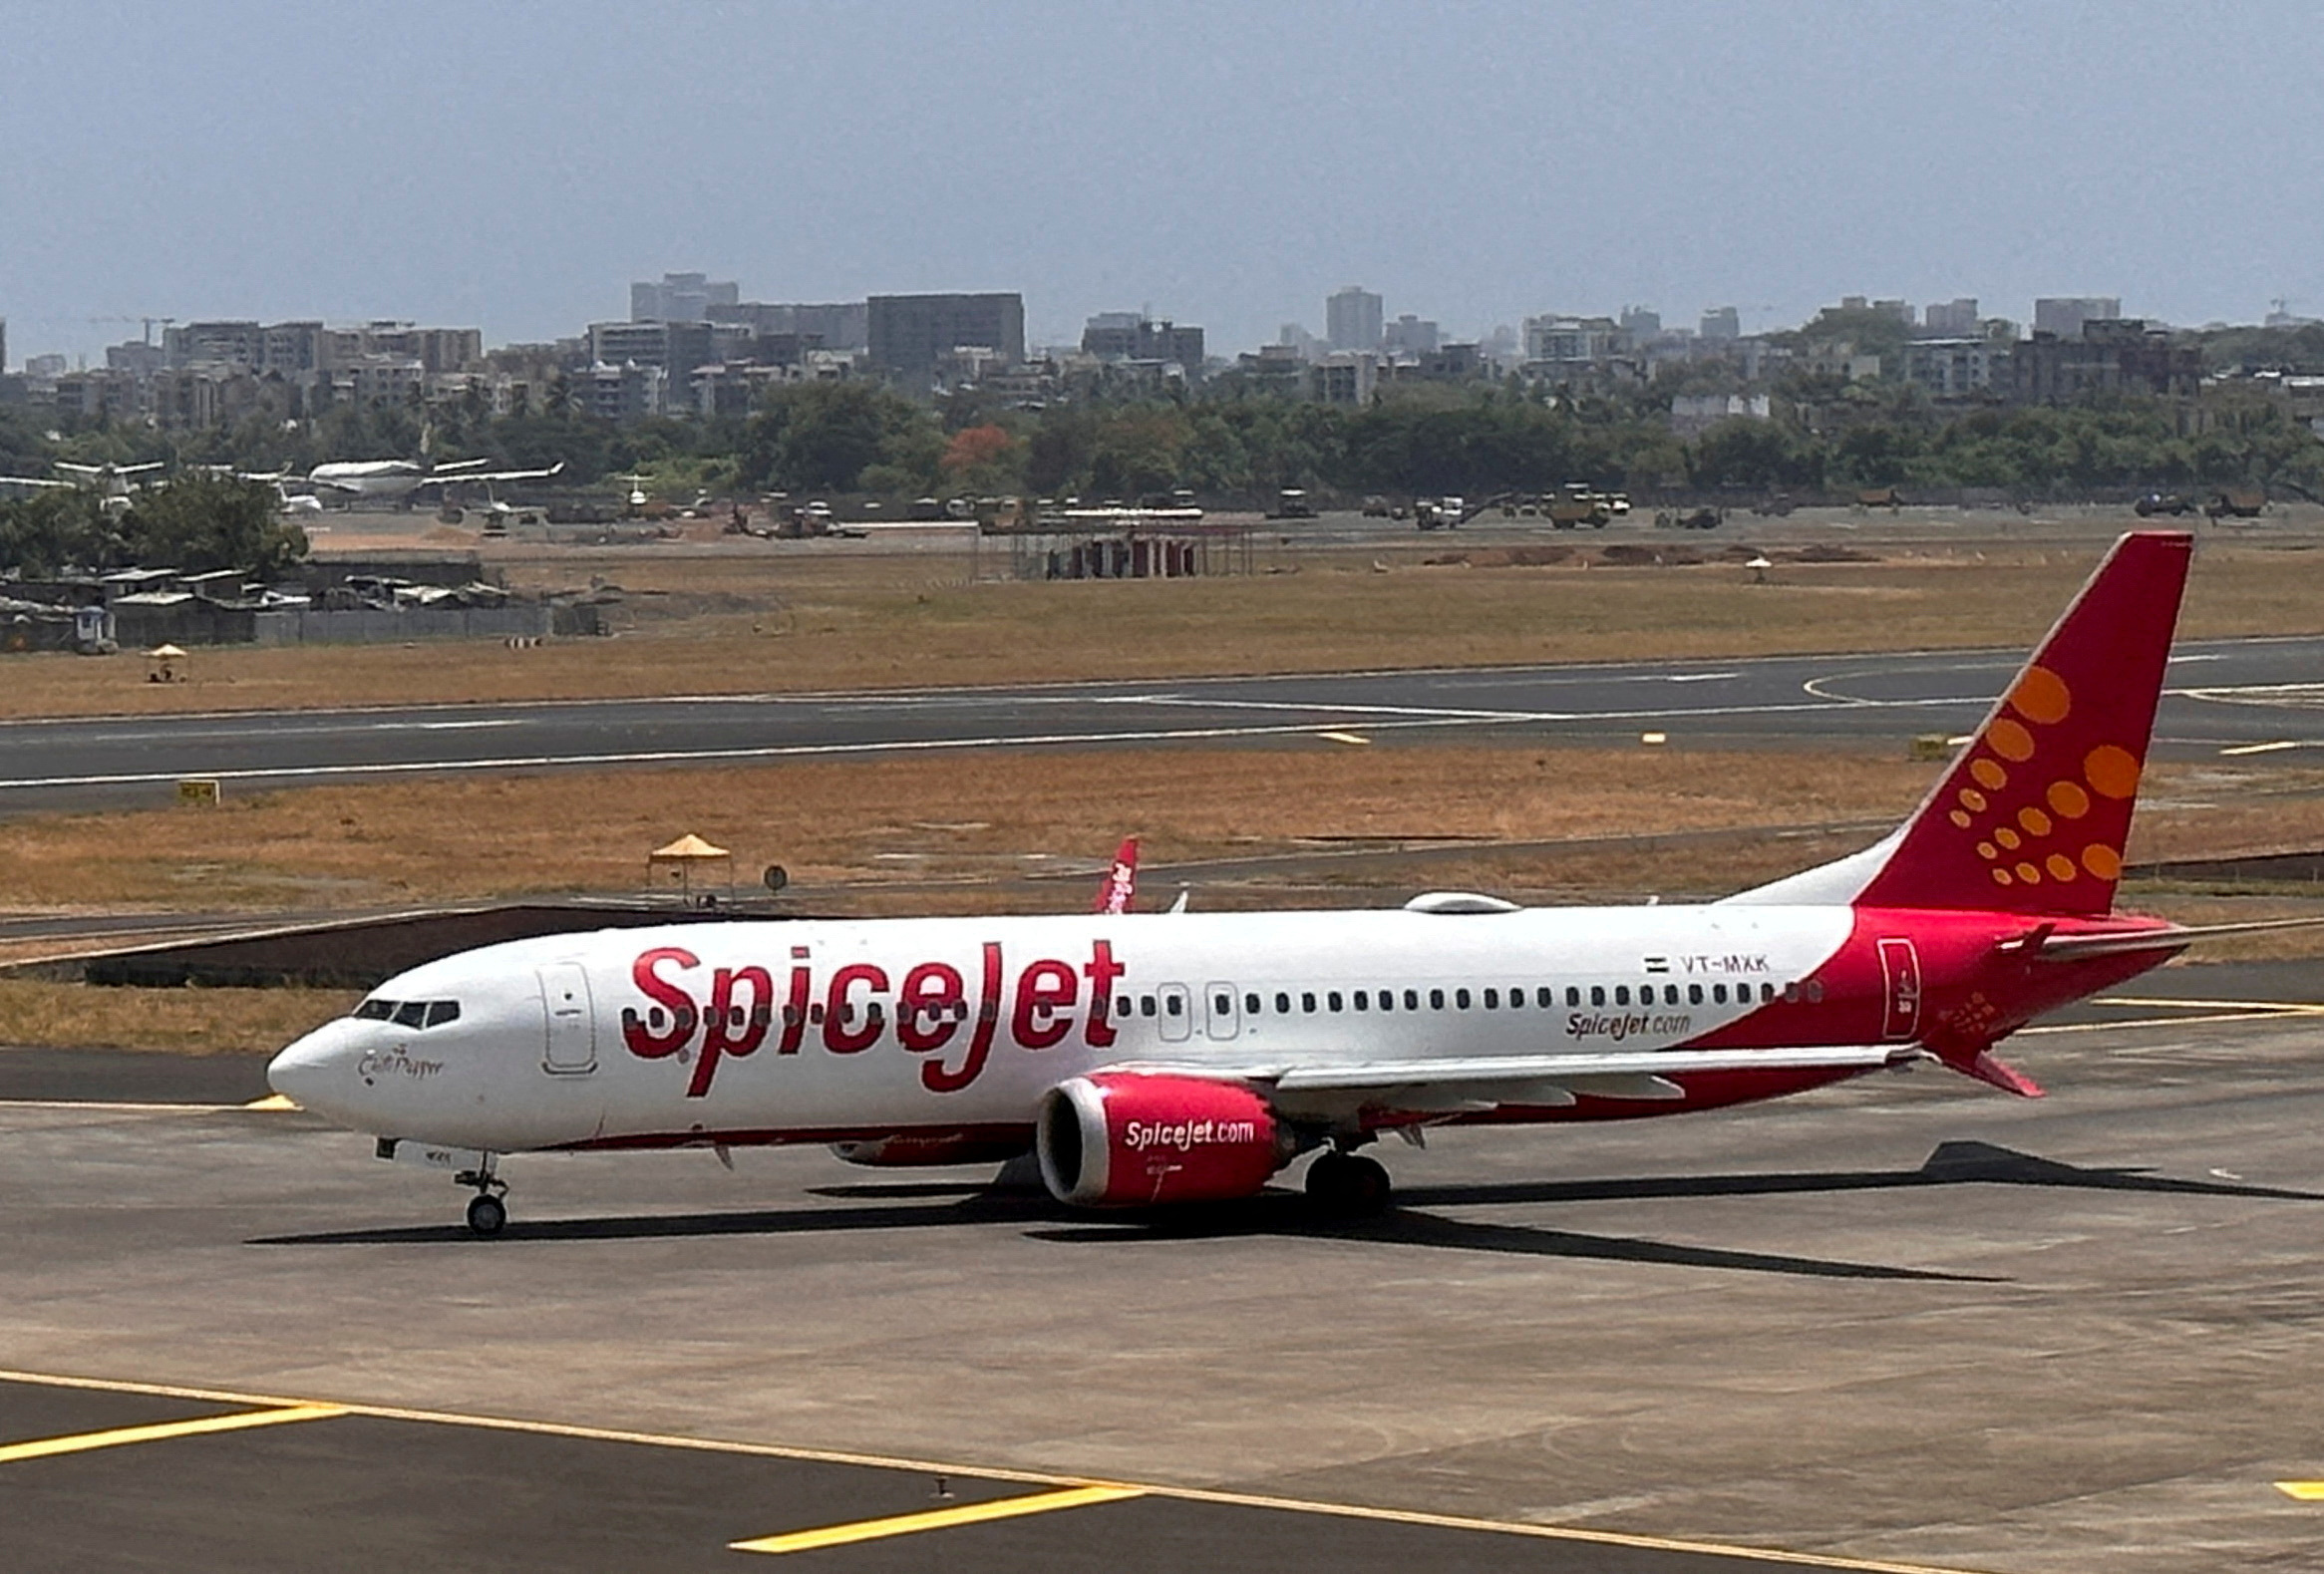 A SpiceJet passenger aircraft taxis on the tarmac at Chhatrapati Shivaji International Airport in Mumbai, India